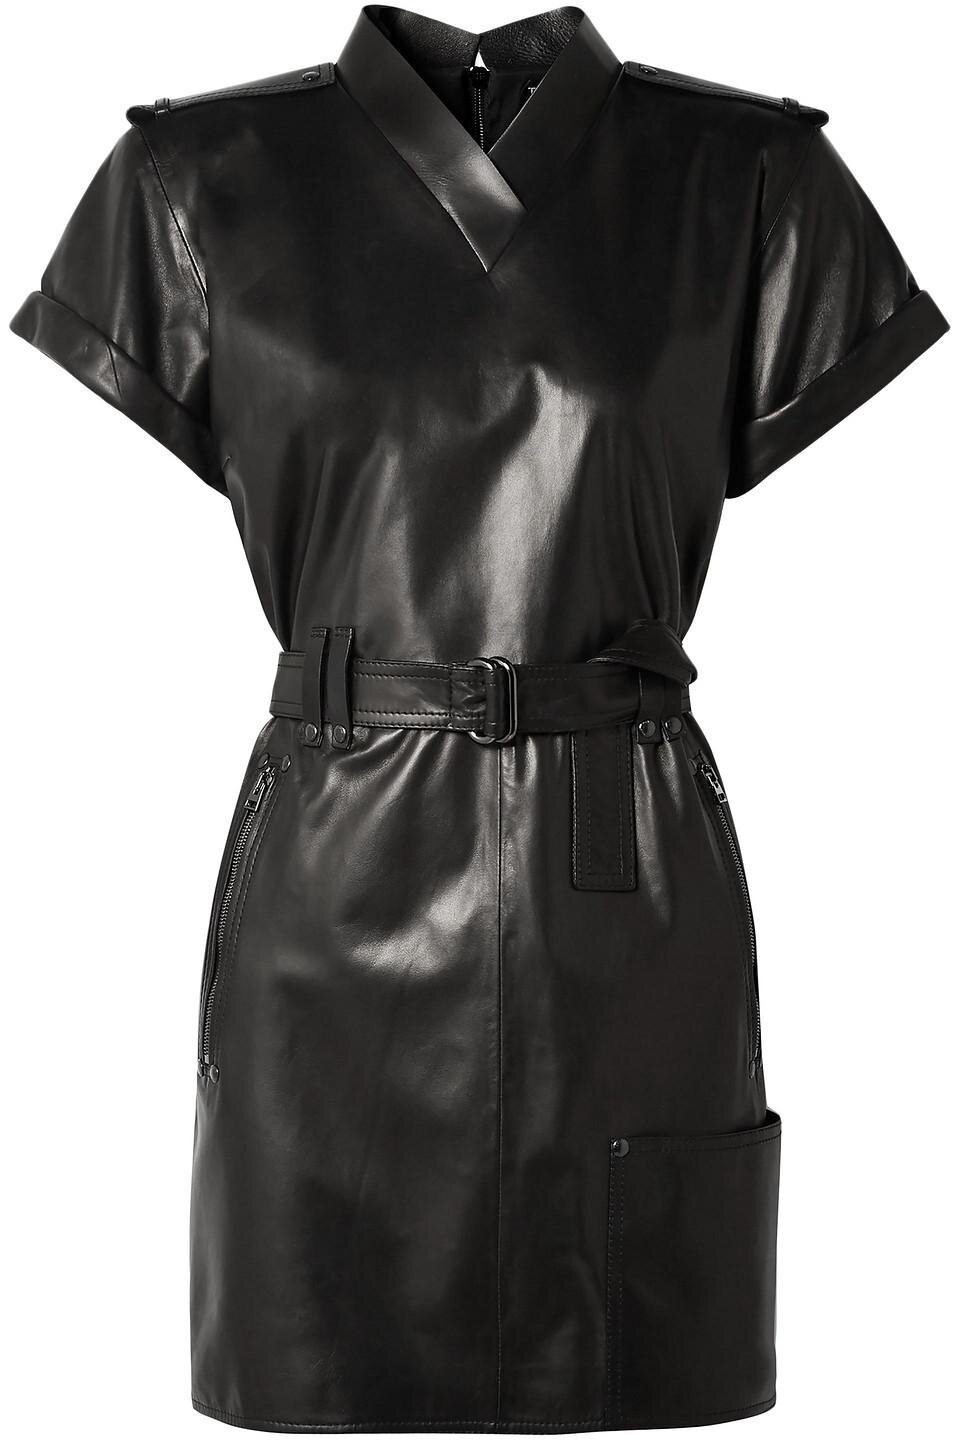 Tom Ford Belted Leather Mini Dress in Black.jpg